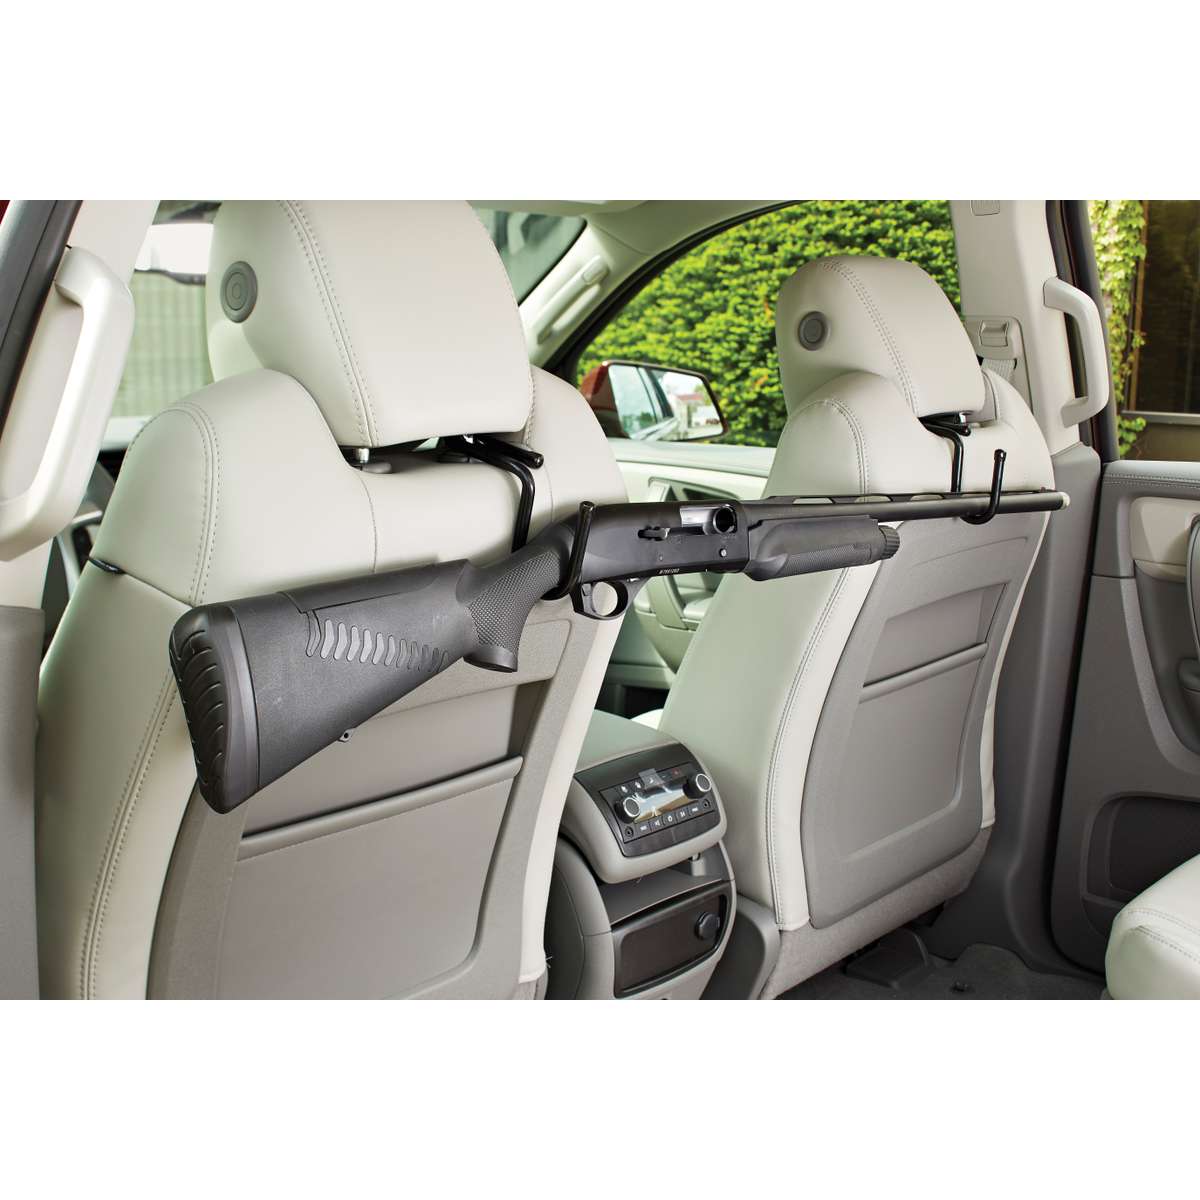 SnapSafe 75881 Vehicle Headrest Gun Rack - 2 Pack